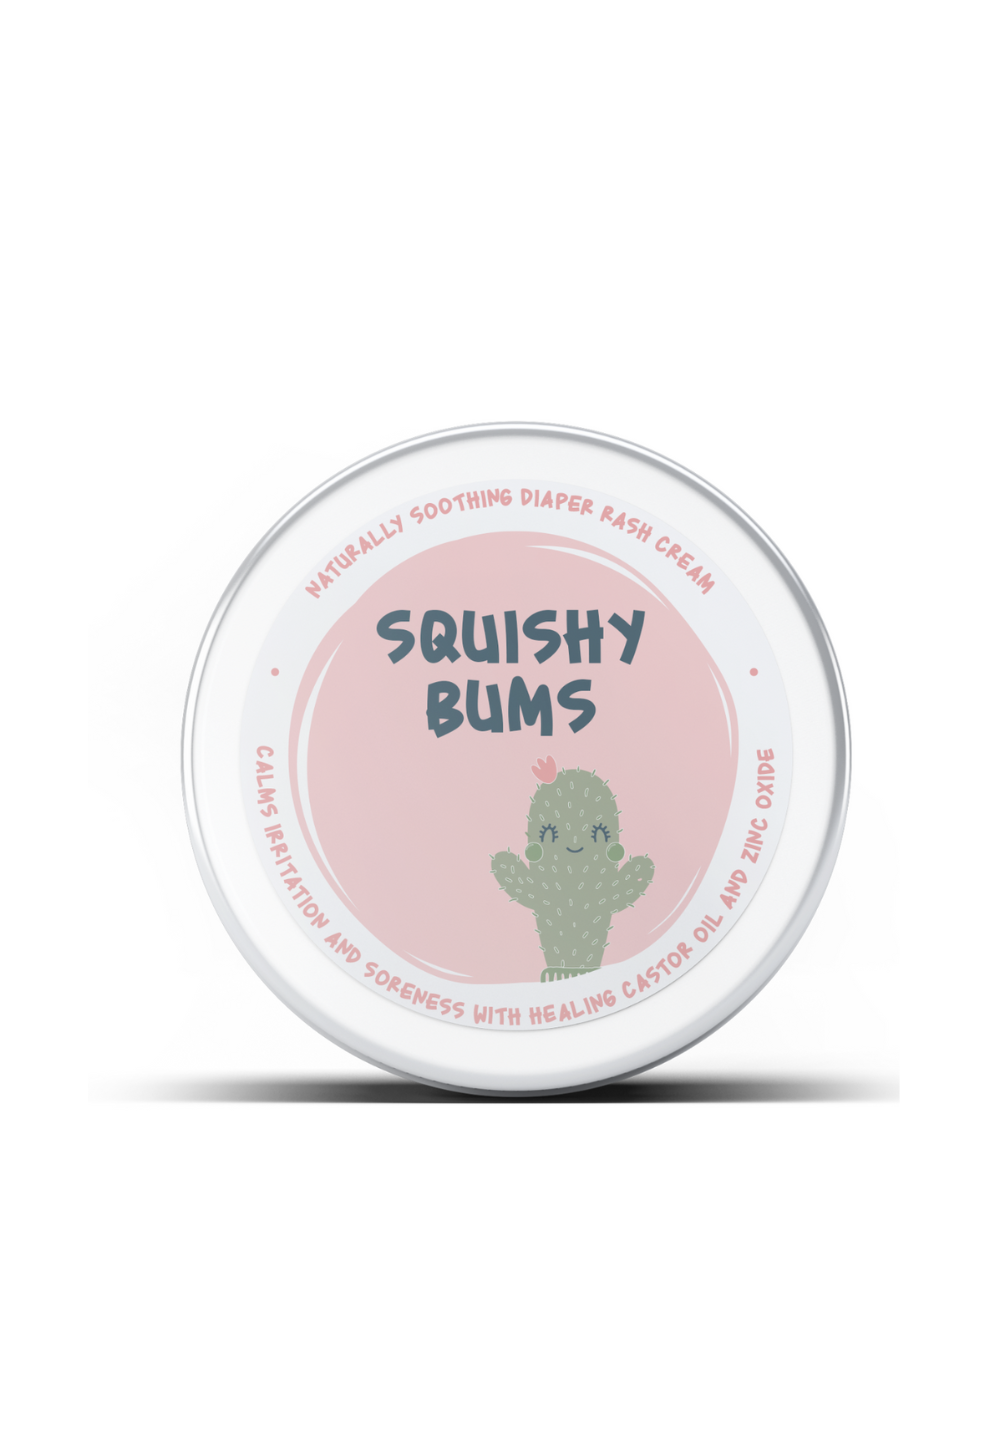 Squishy Bums